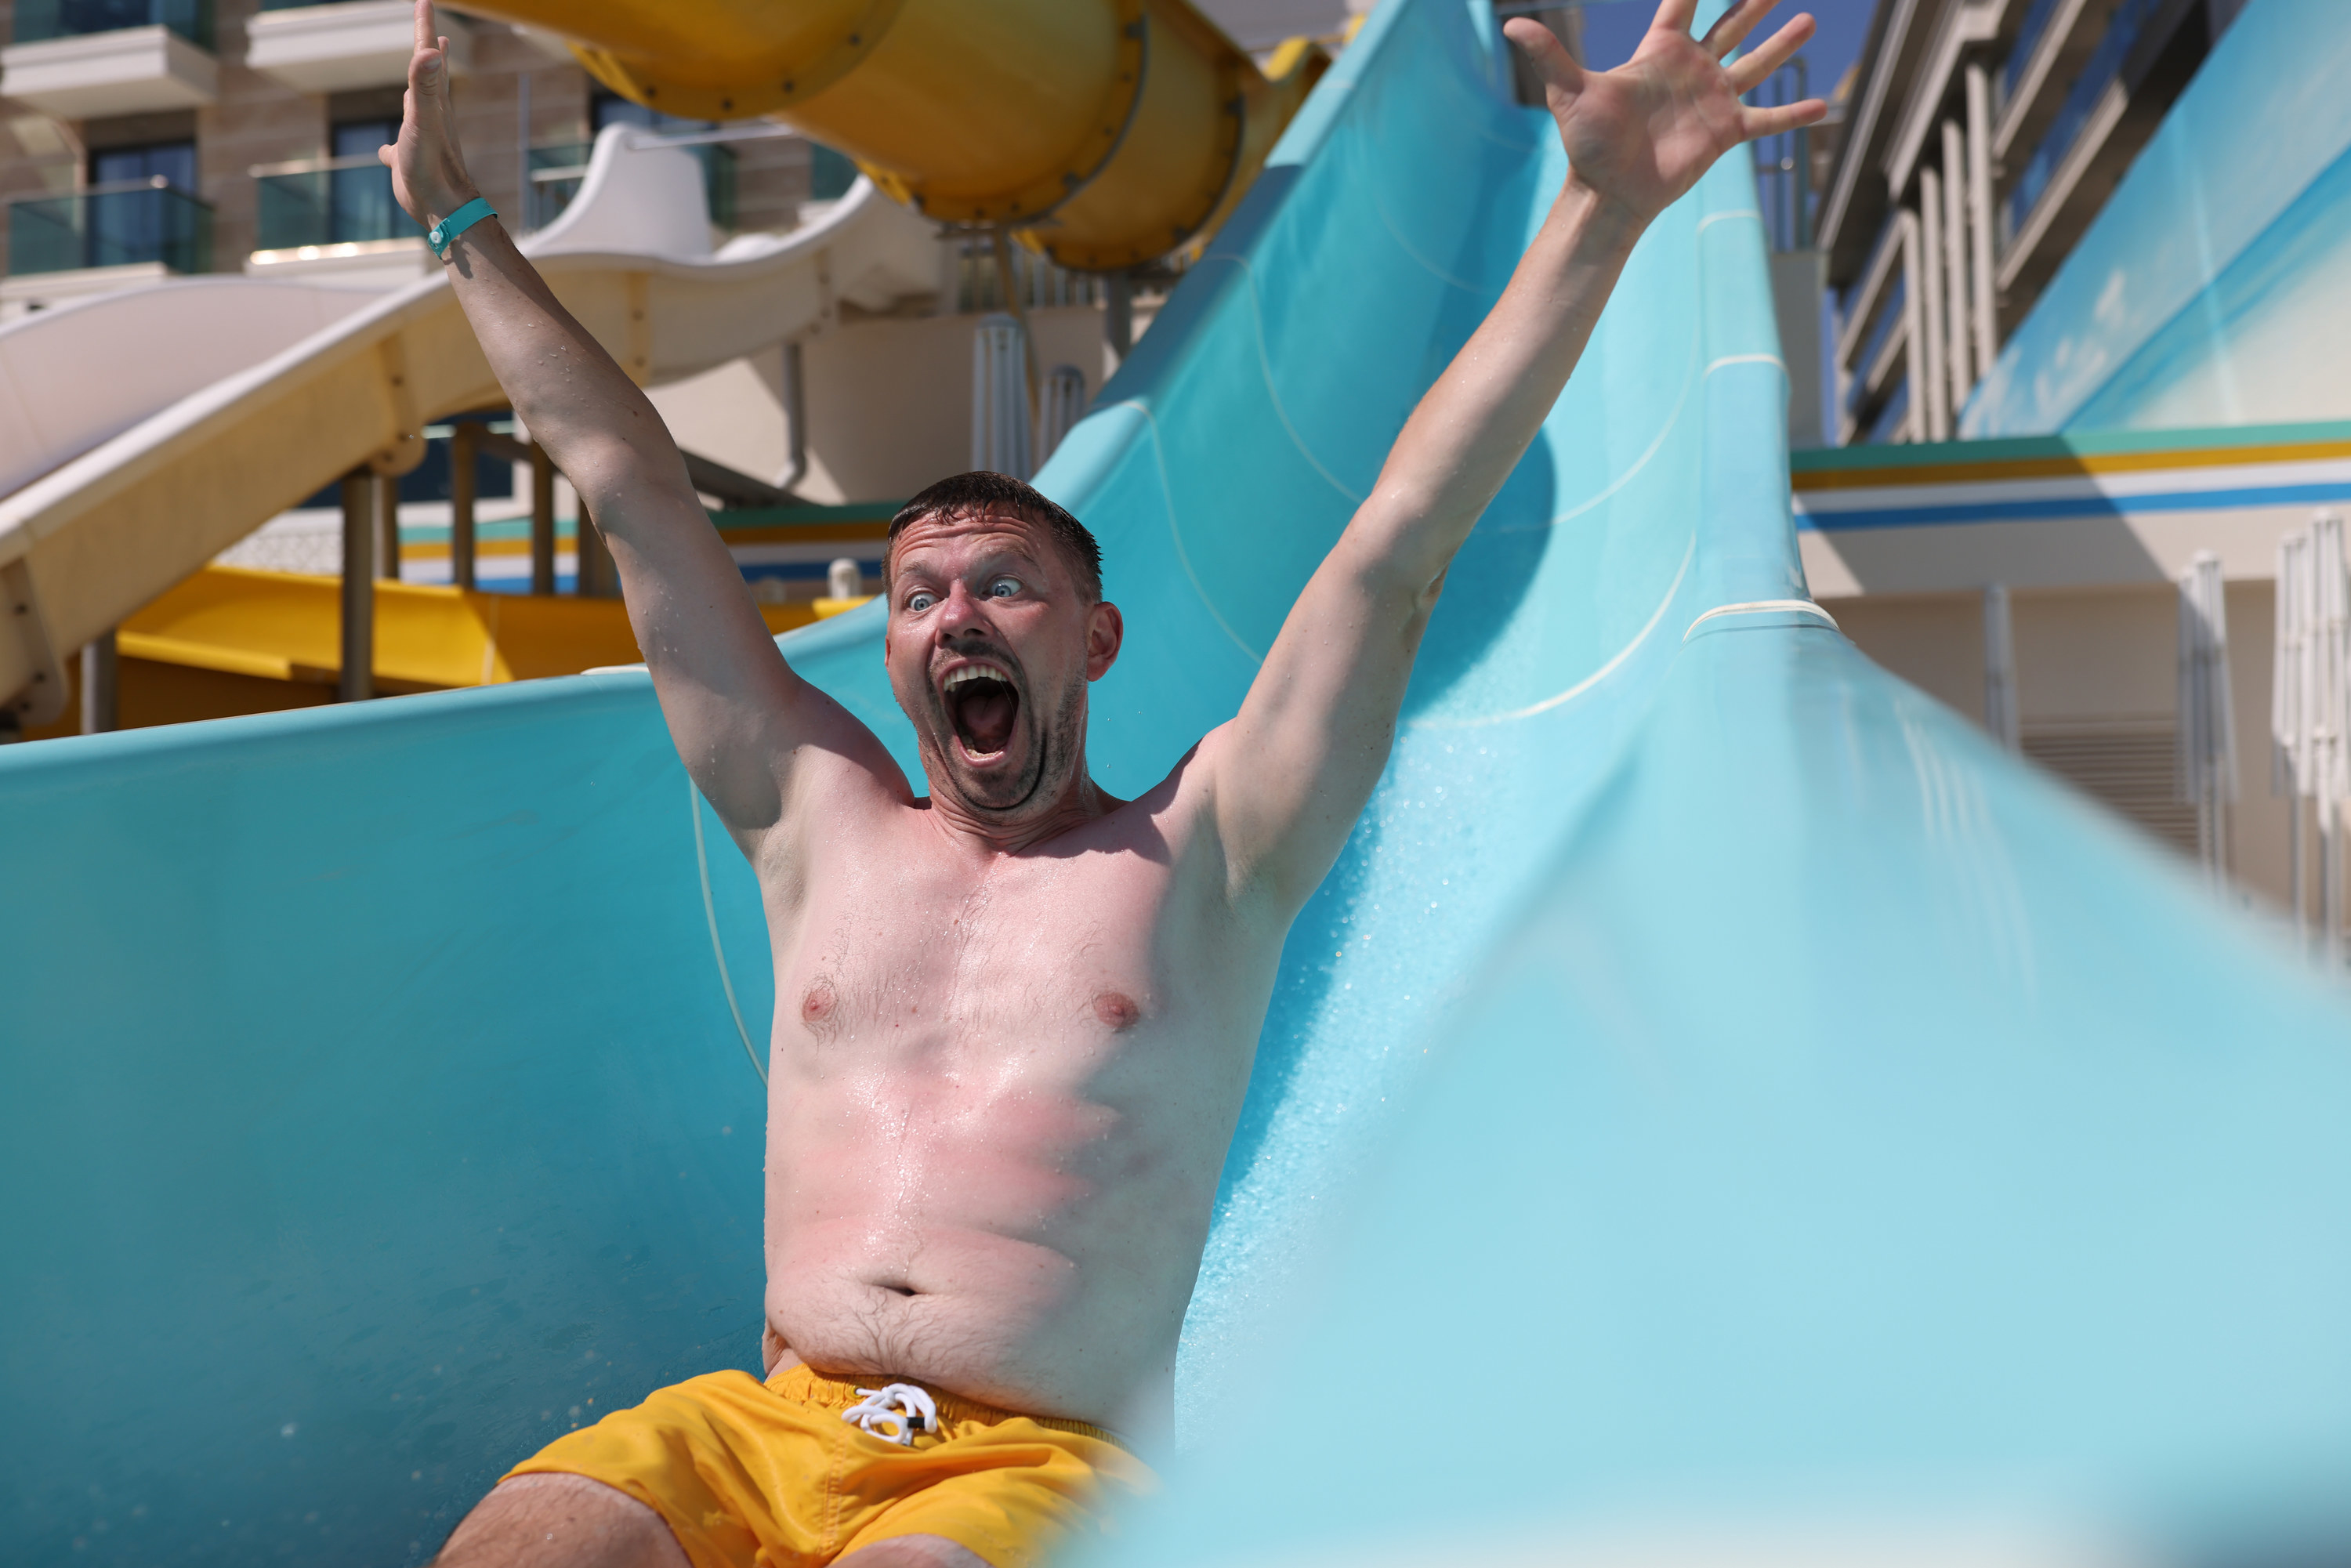 A happy man slides down a water slide